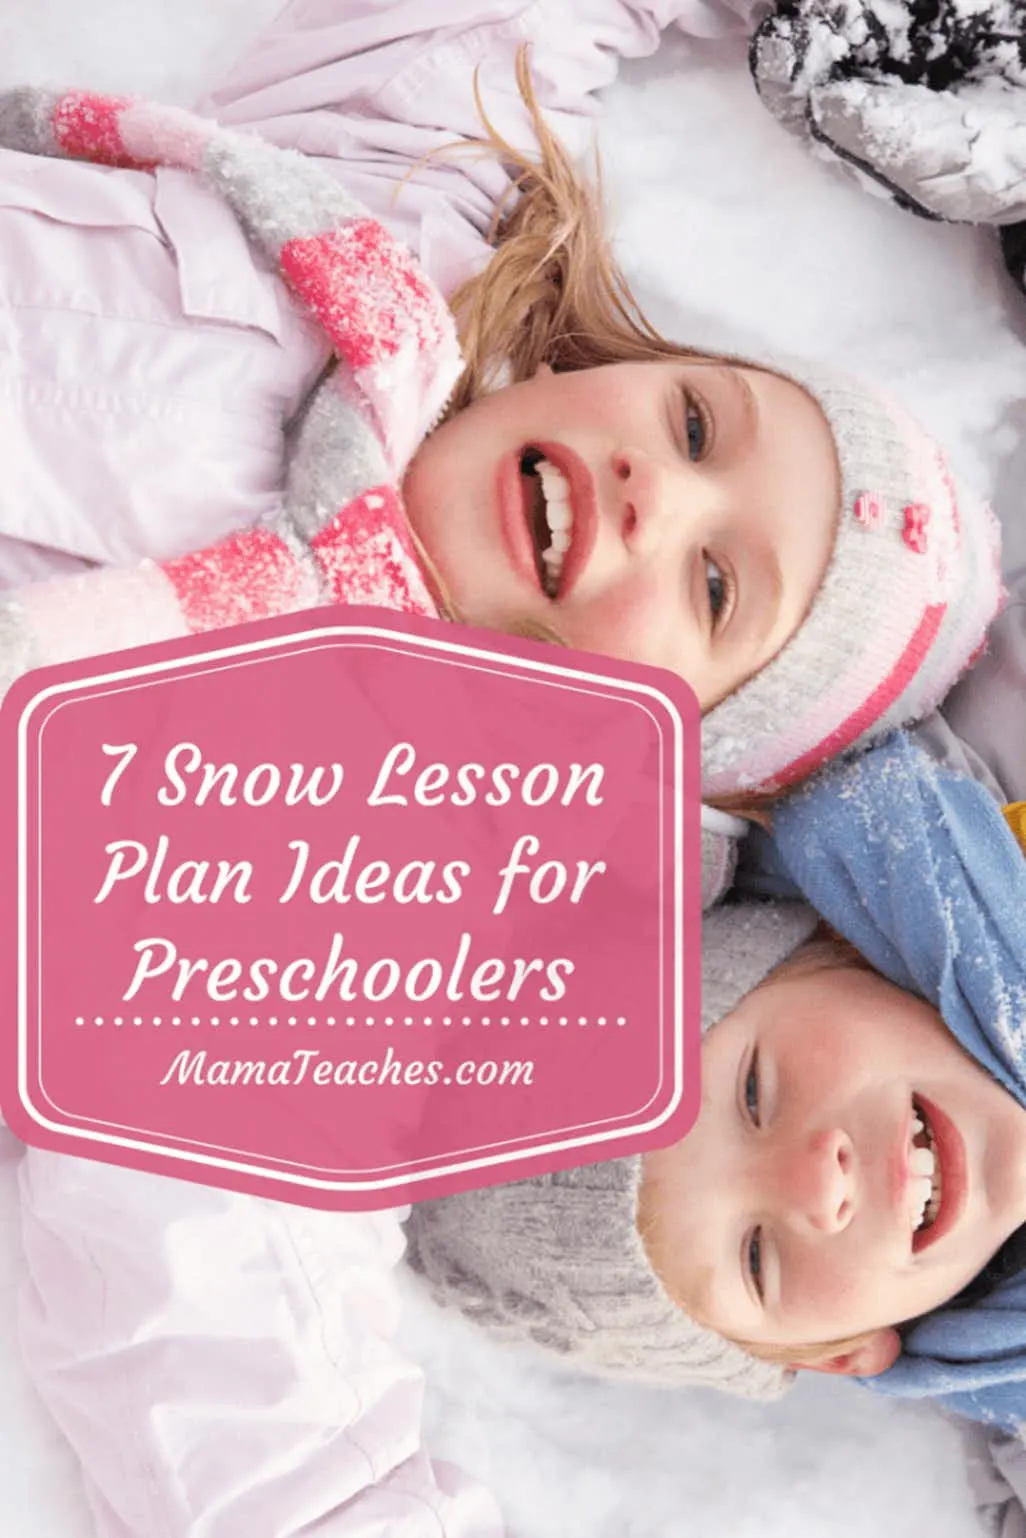 7 Snow Lesson Plan Ideas for Preschool